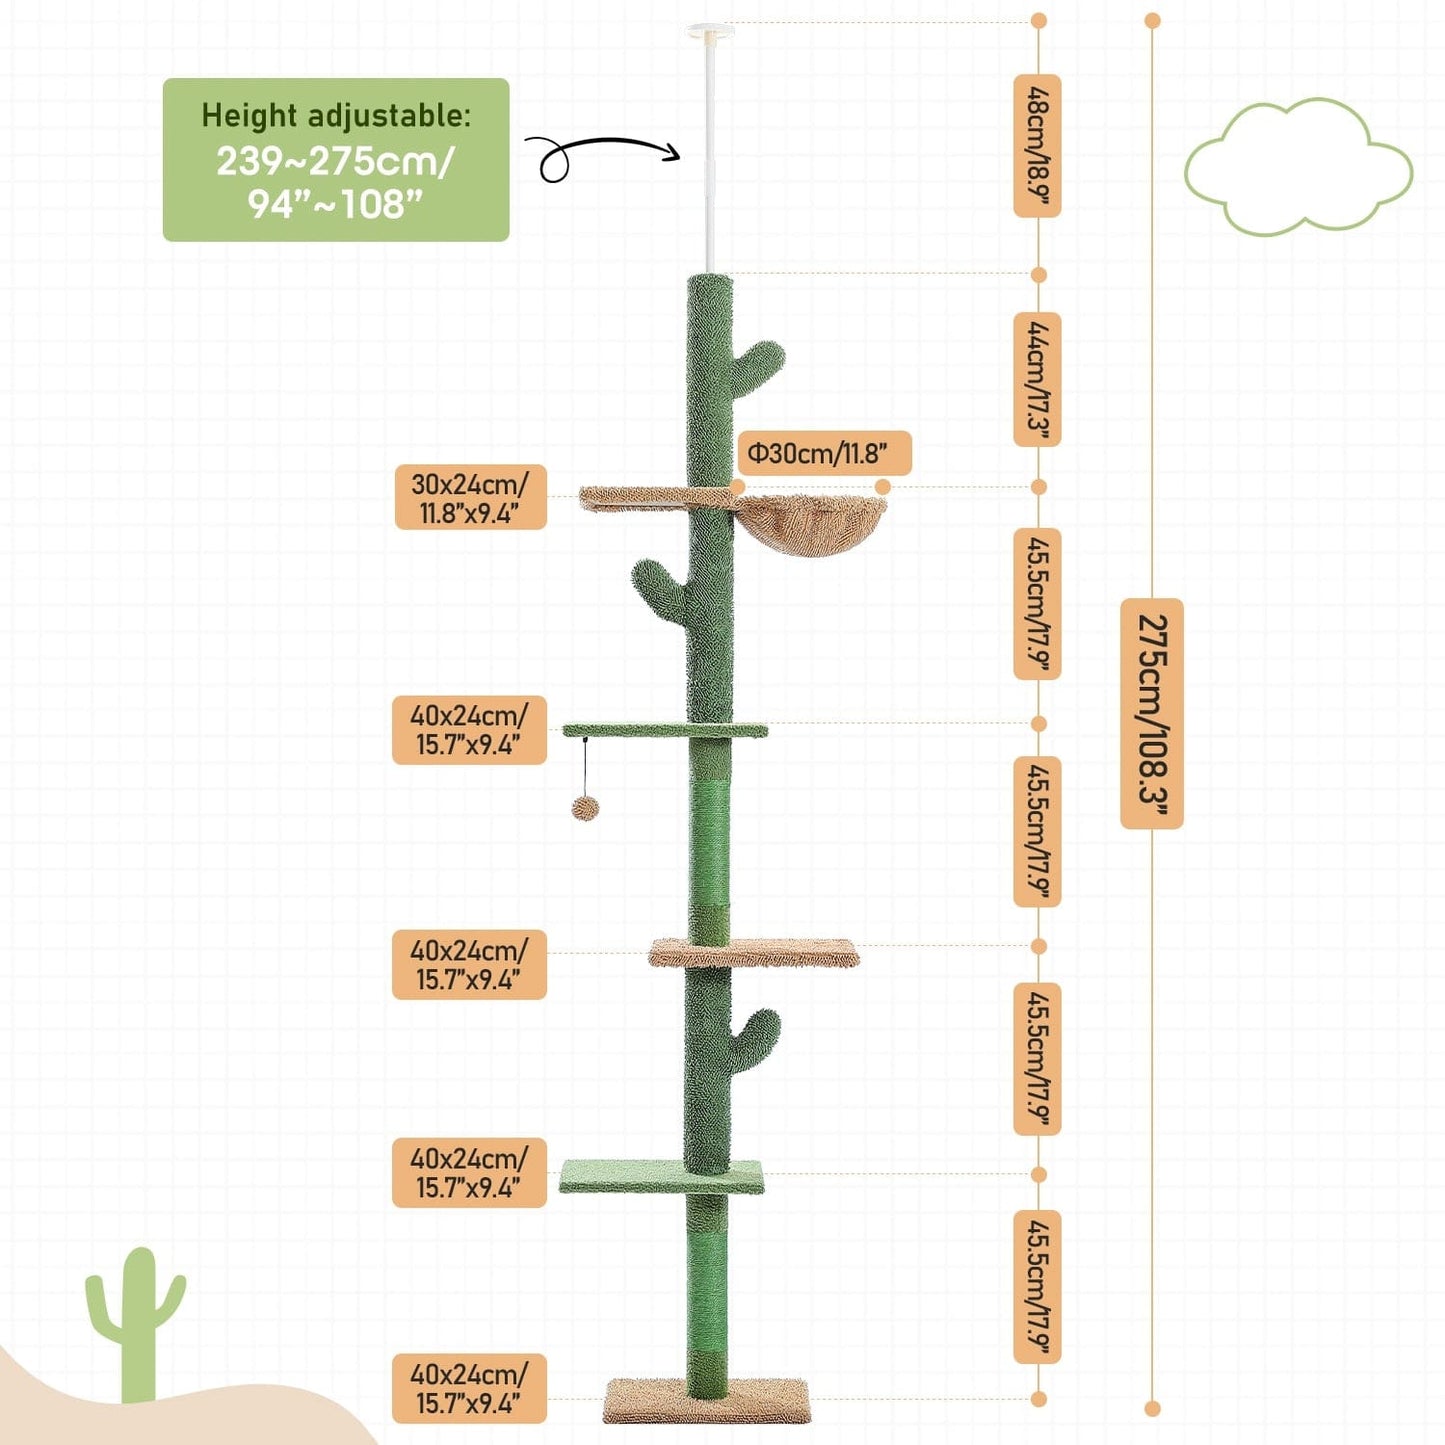 5-stöckiger vertikaler Kaktus-Kratzbaum